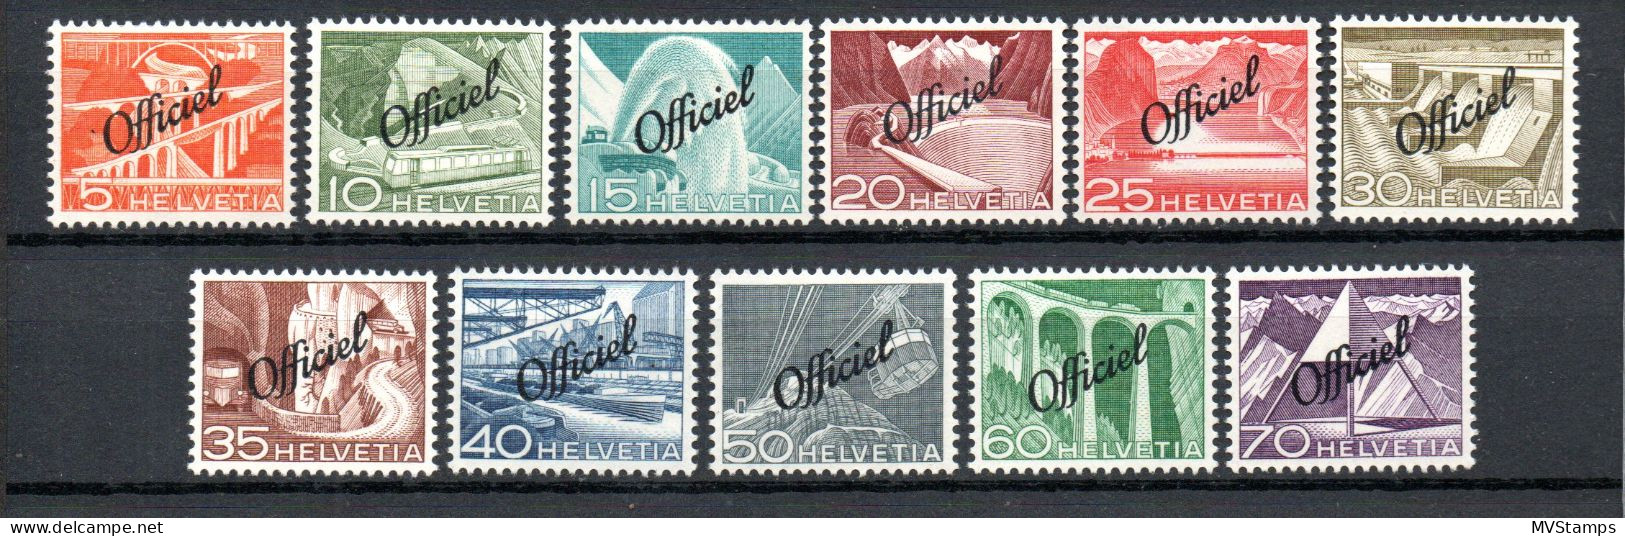 Switzerland 1950 Set Overprinted Service Stamps (Michel D 64/74) MLH - Oficial